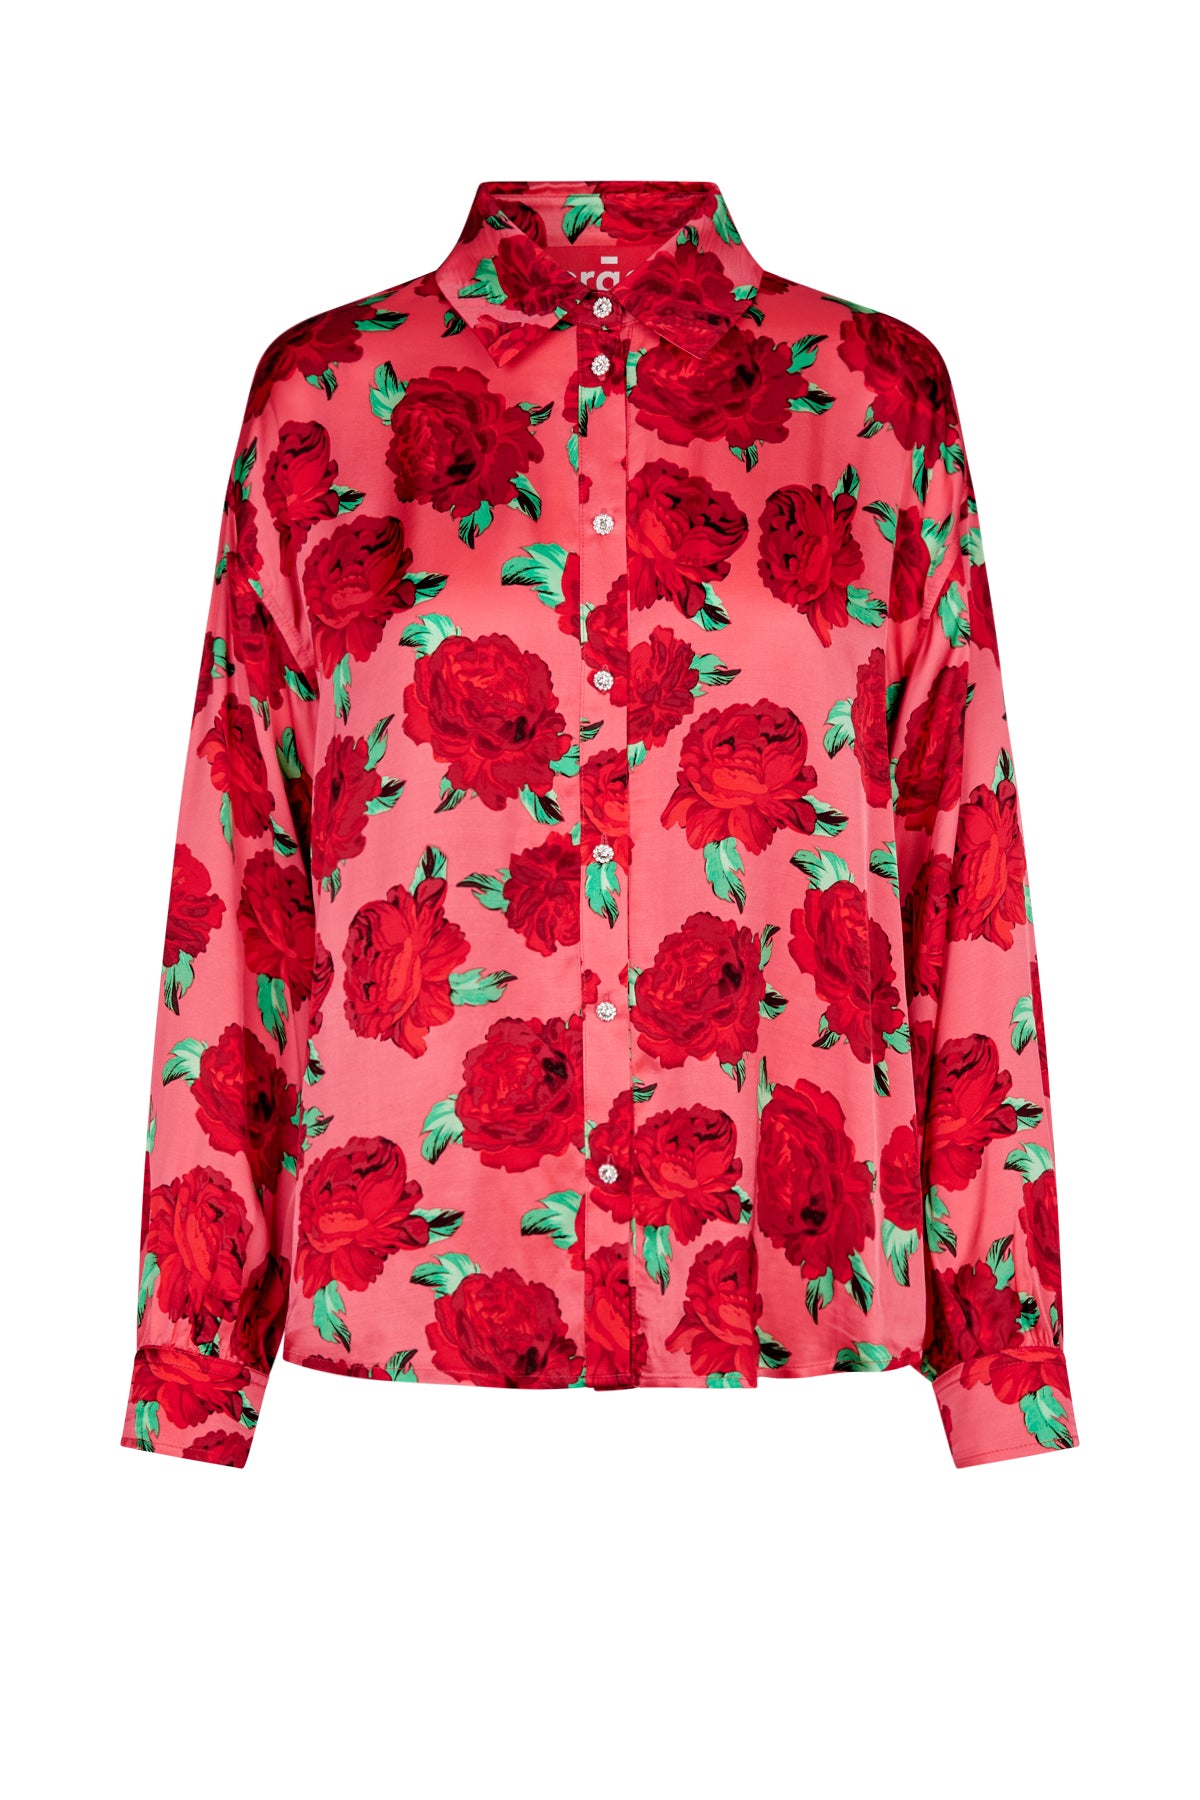 CRAS Gina Shirt Shirt 8019 Coral Roses